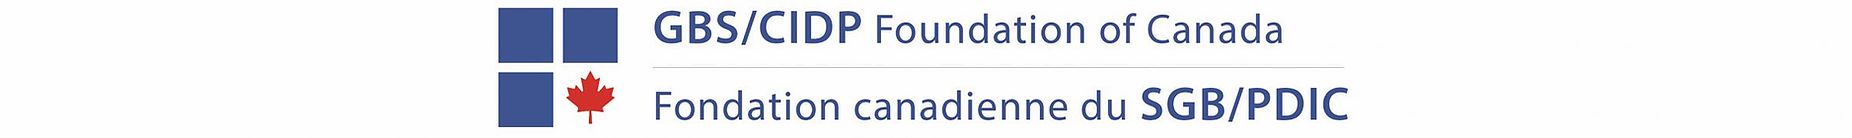 GBS/CIPD Foundation Canada